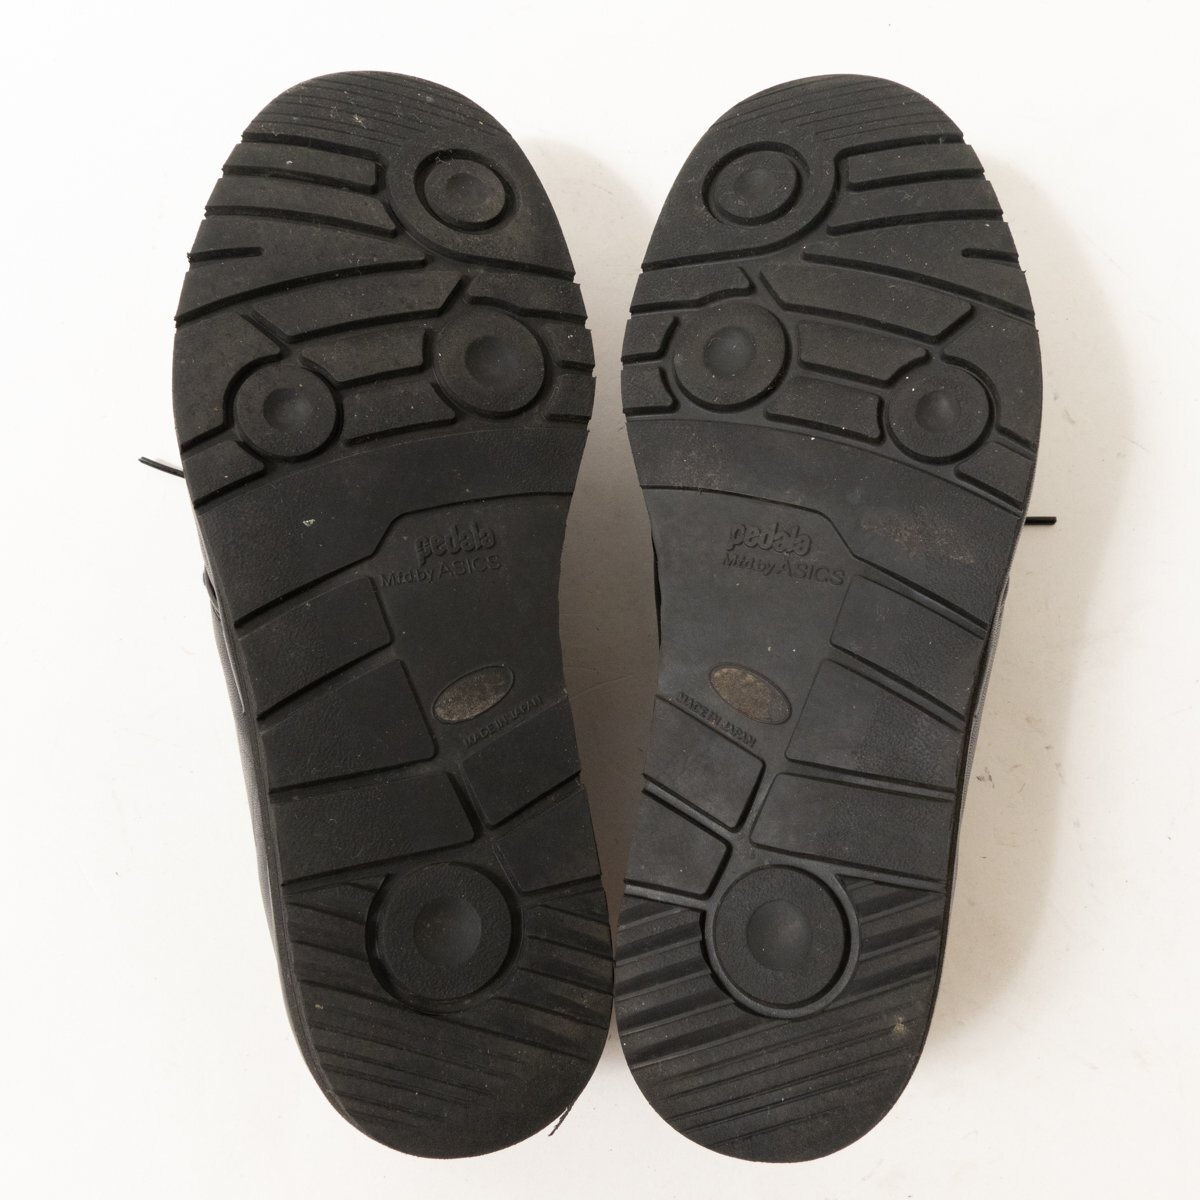 asics PEDALA Asics pedala walking shoes sport shoes 23.5cm leather black black series walk motion sport long distance travel woman 